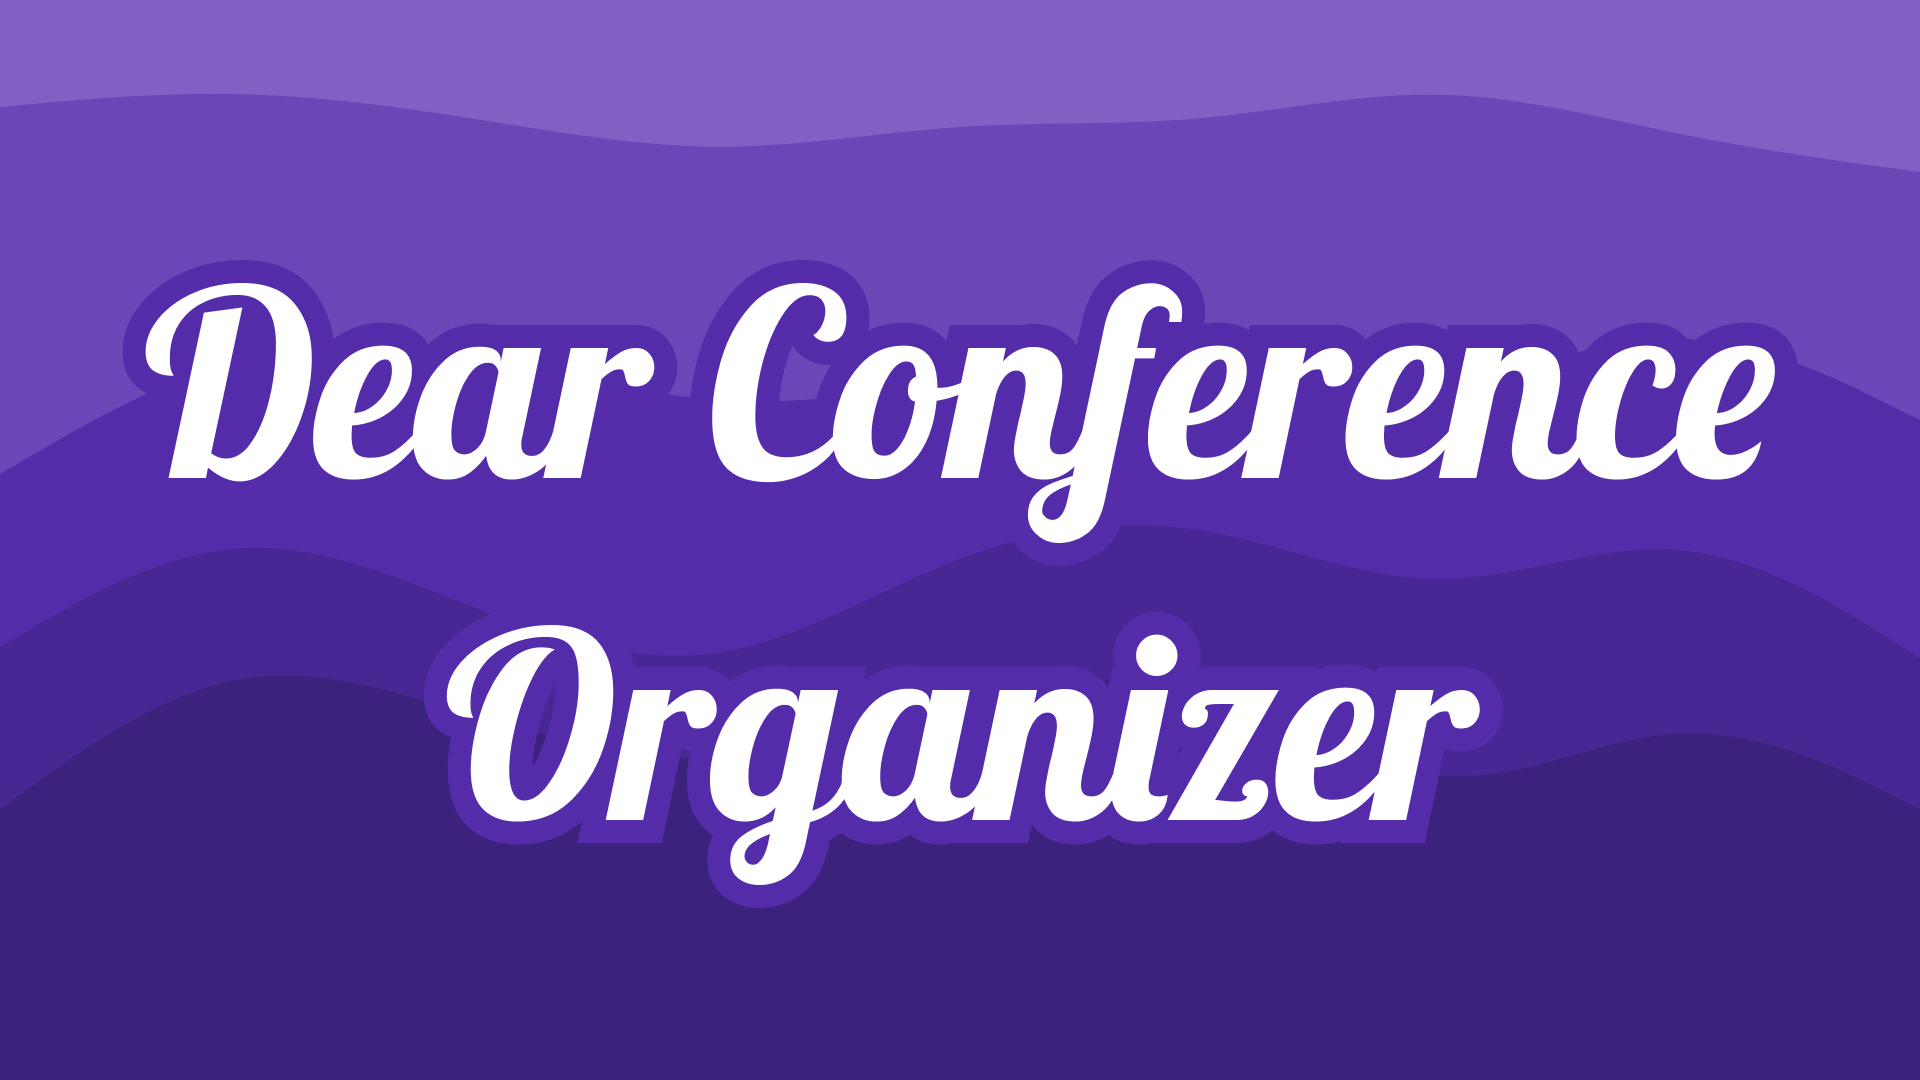 Dear Conference Organizer